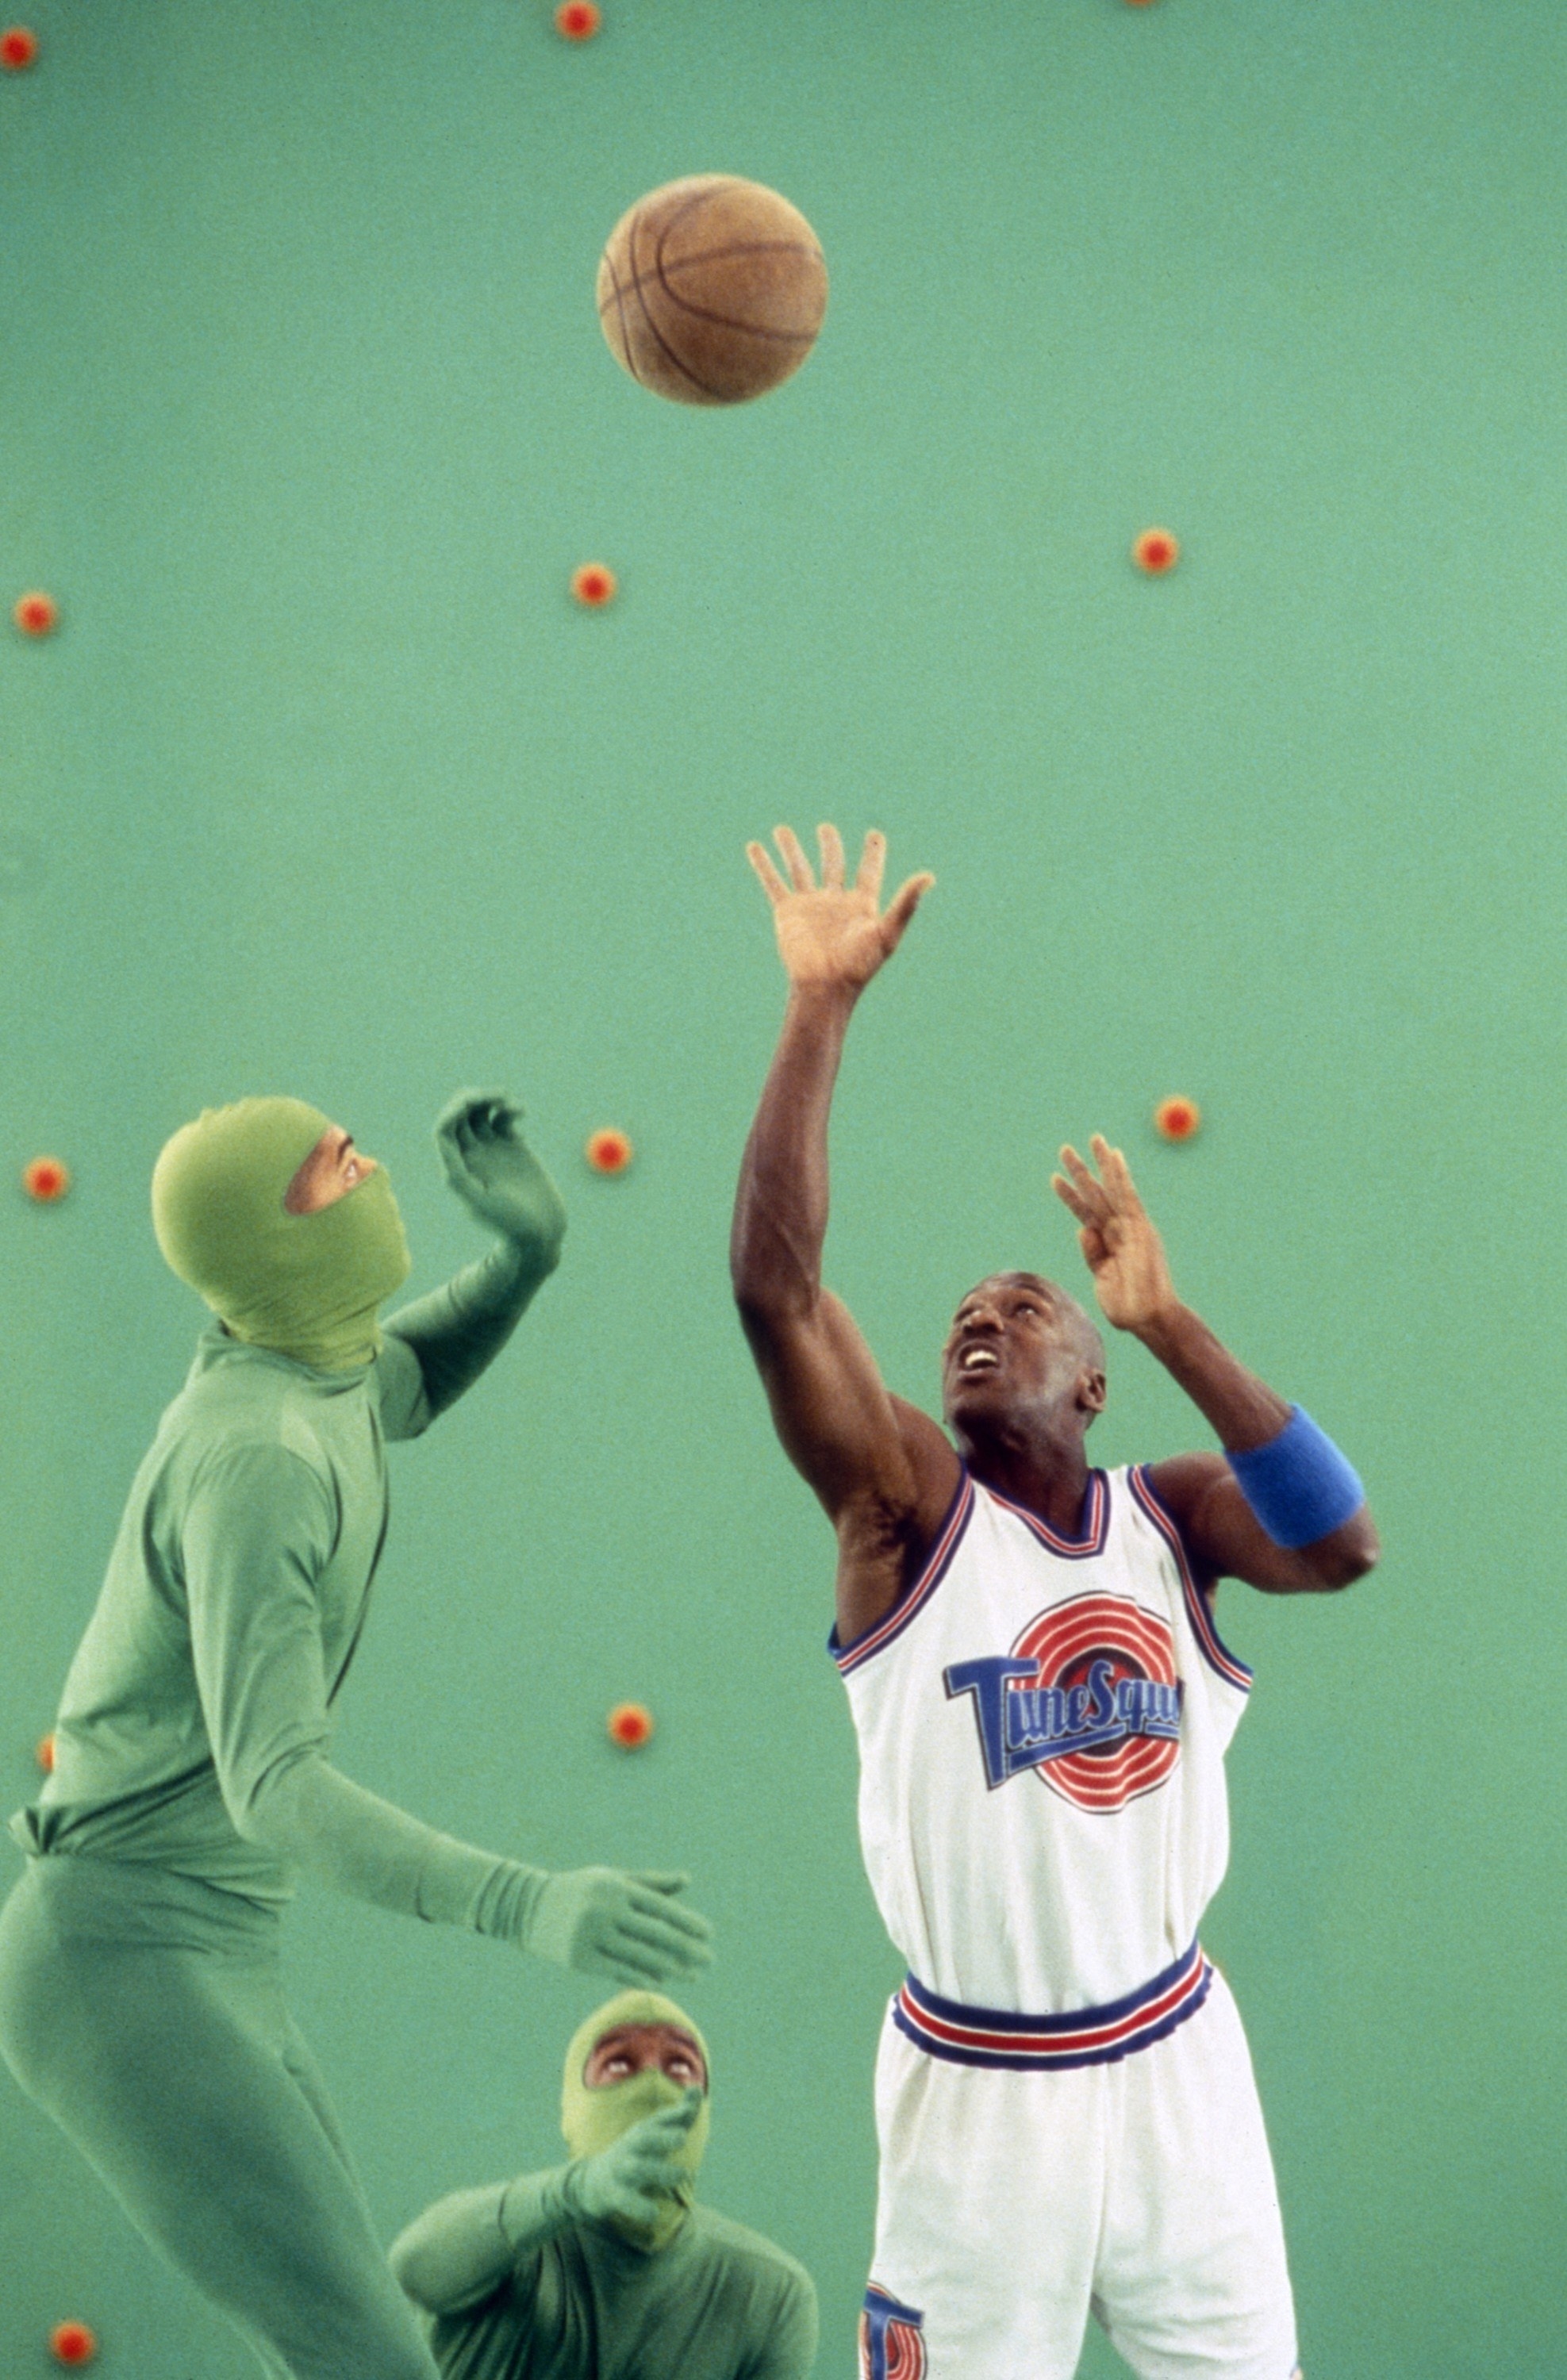 Michael Jordan shooting a basketball